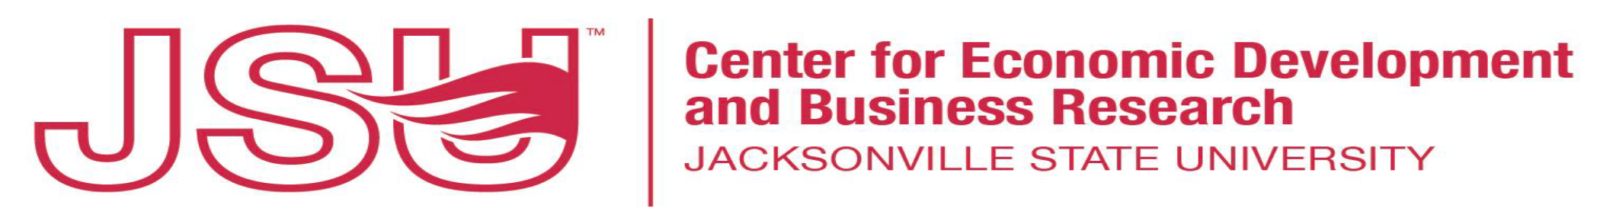 Jacksonville State CEDBR logo